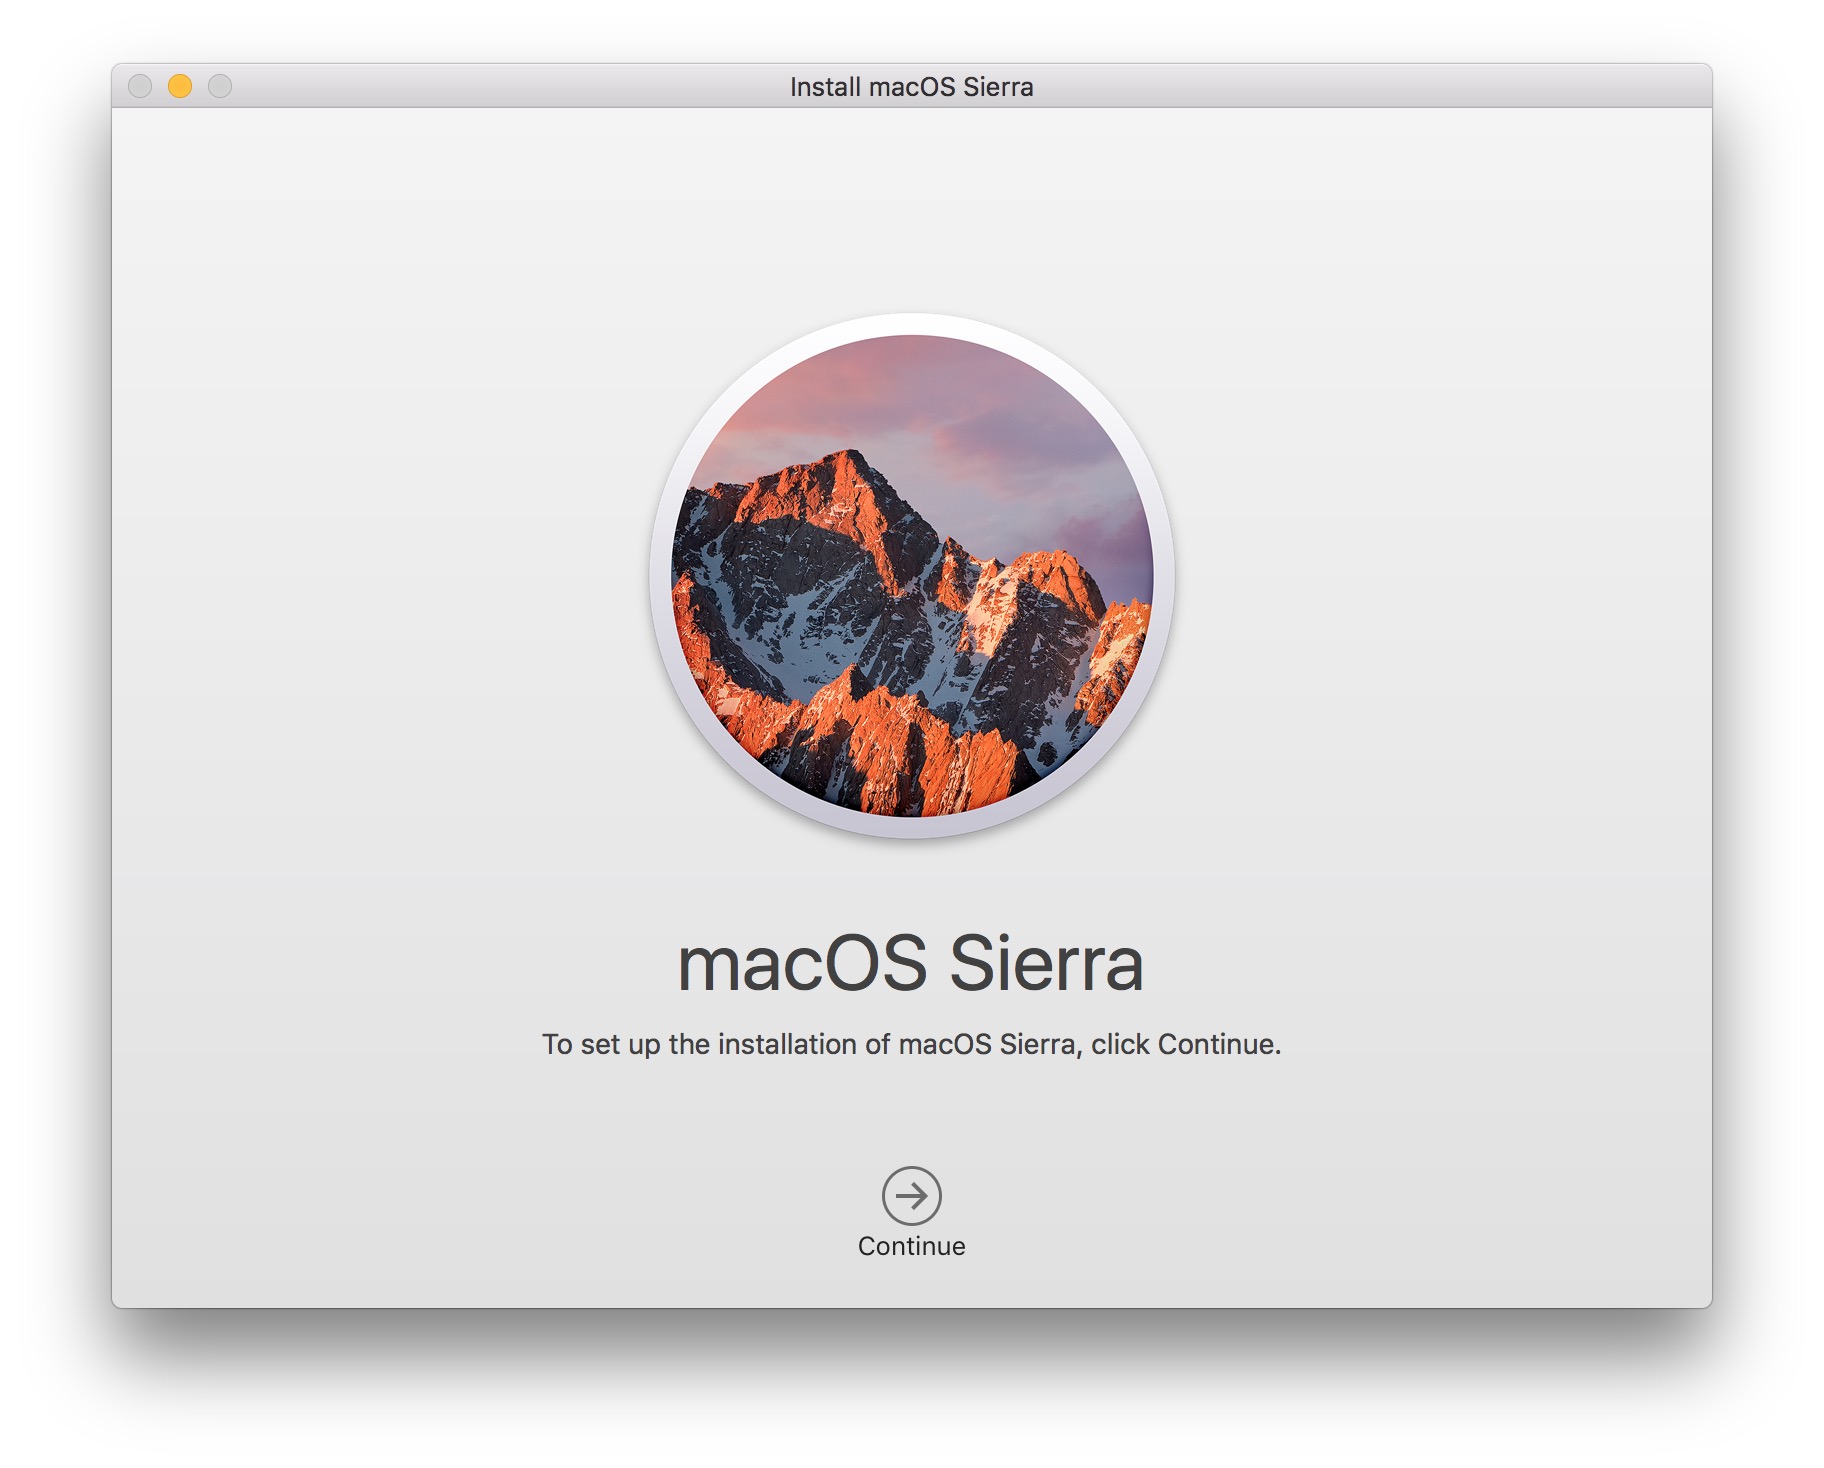 Mời tải về macOS 10.12 Sierra bản Golden Master cho Mac